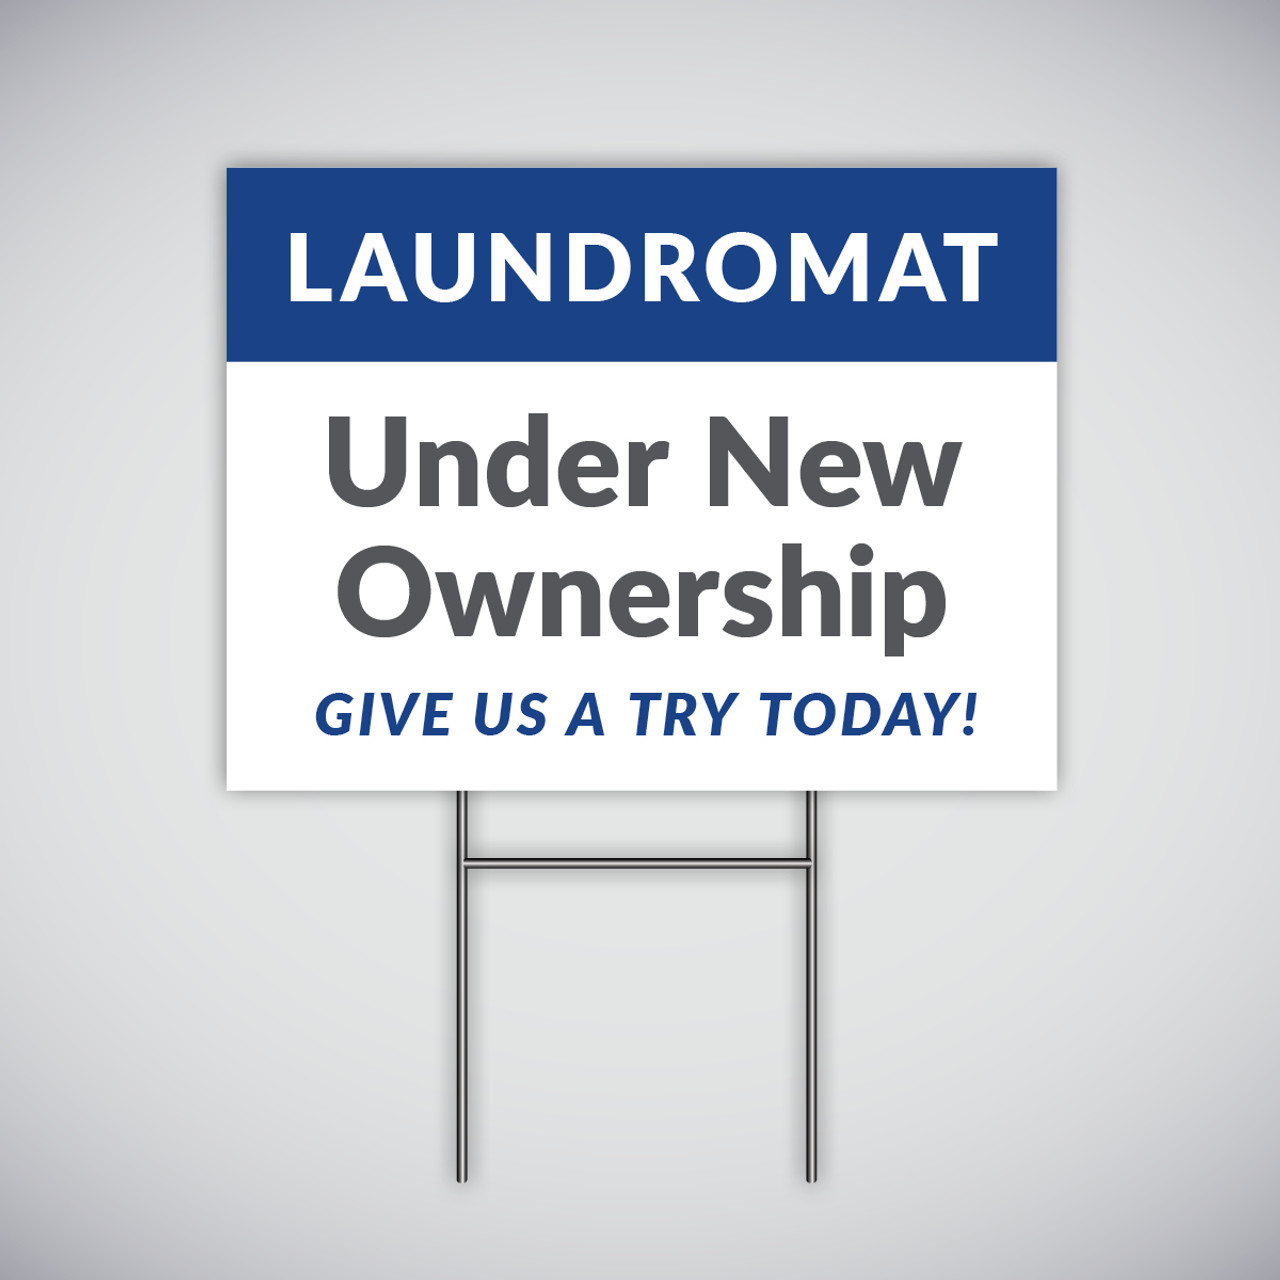 Laundromat Under New Ownership Yard Sign - Blue